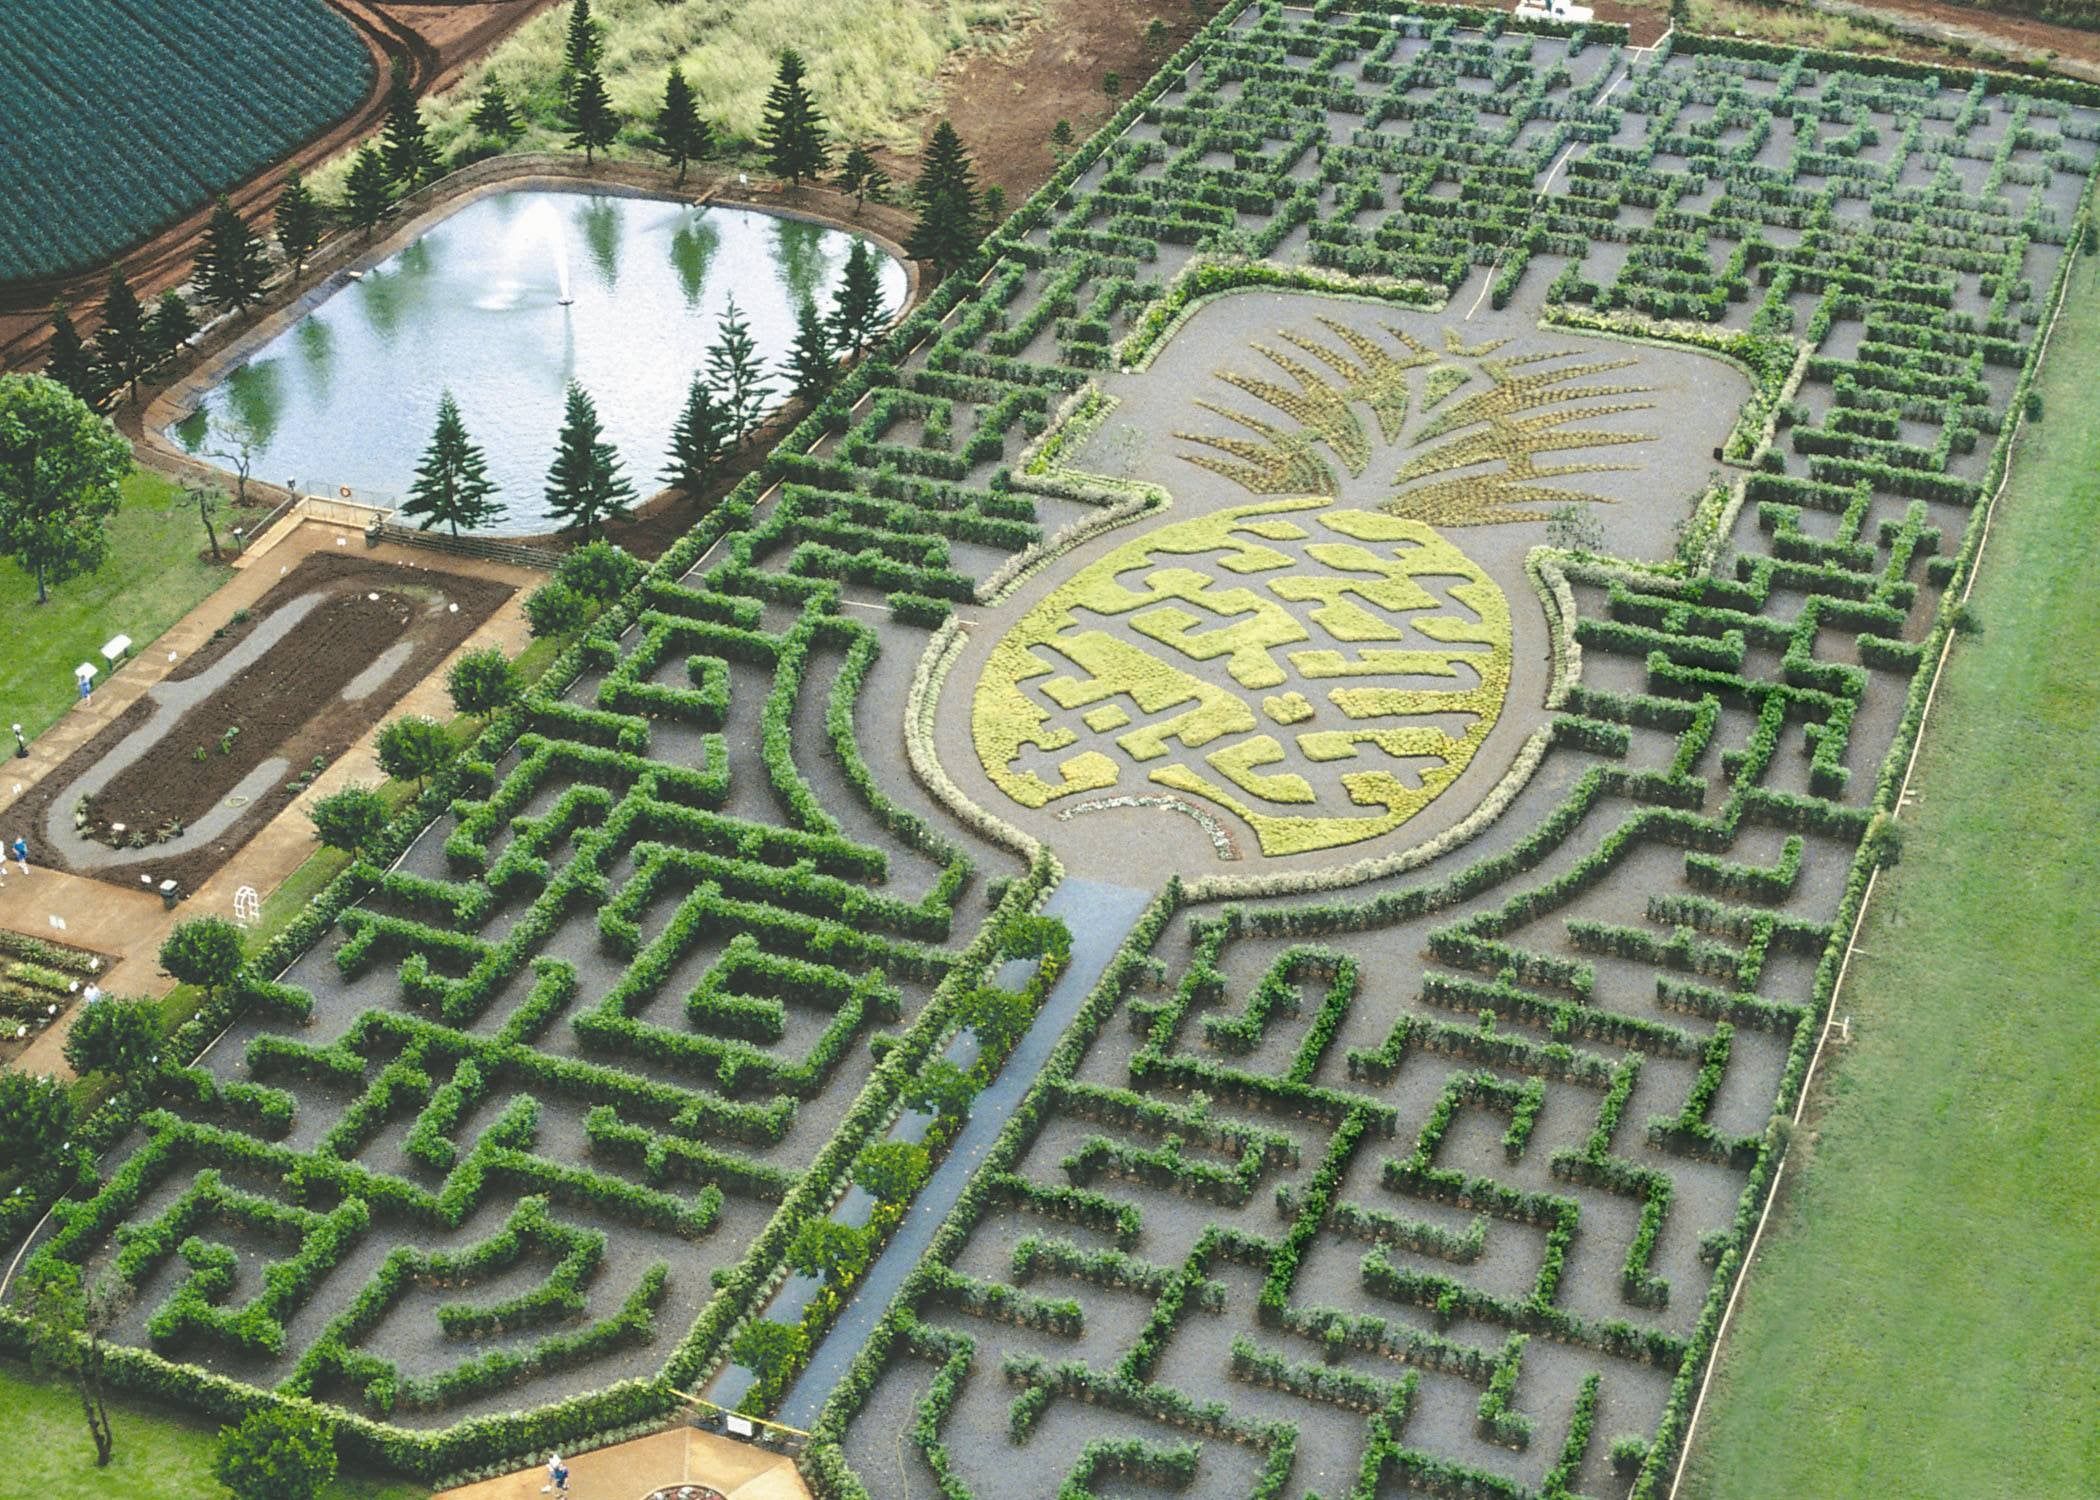 the dole plantation maze in hawaii